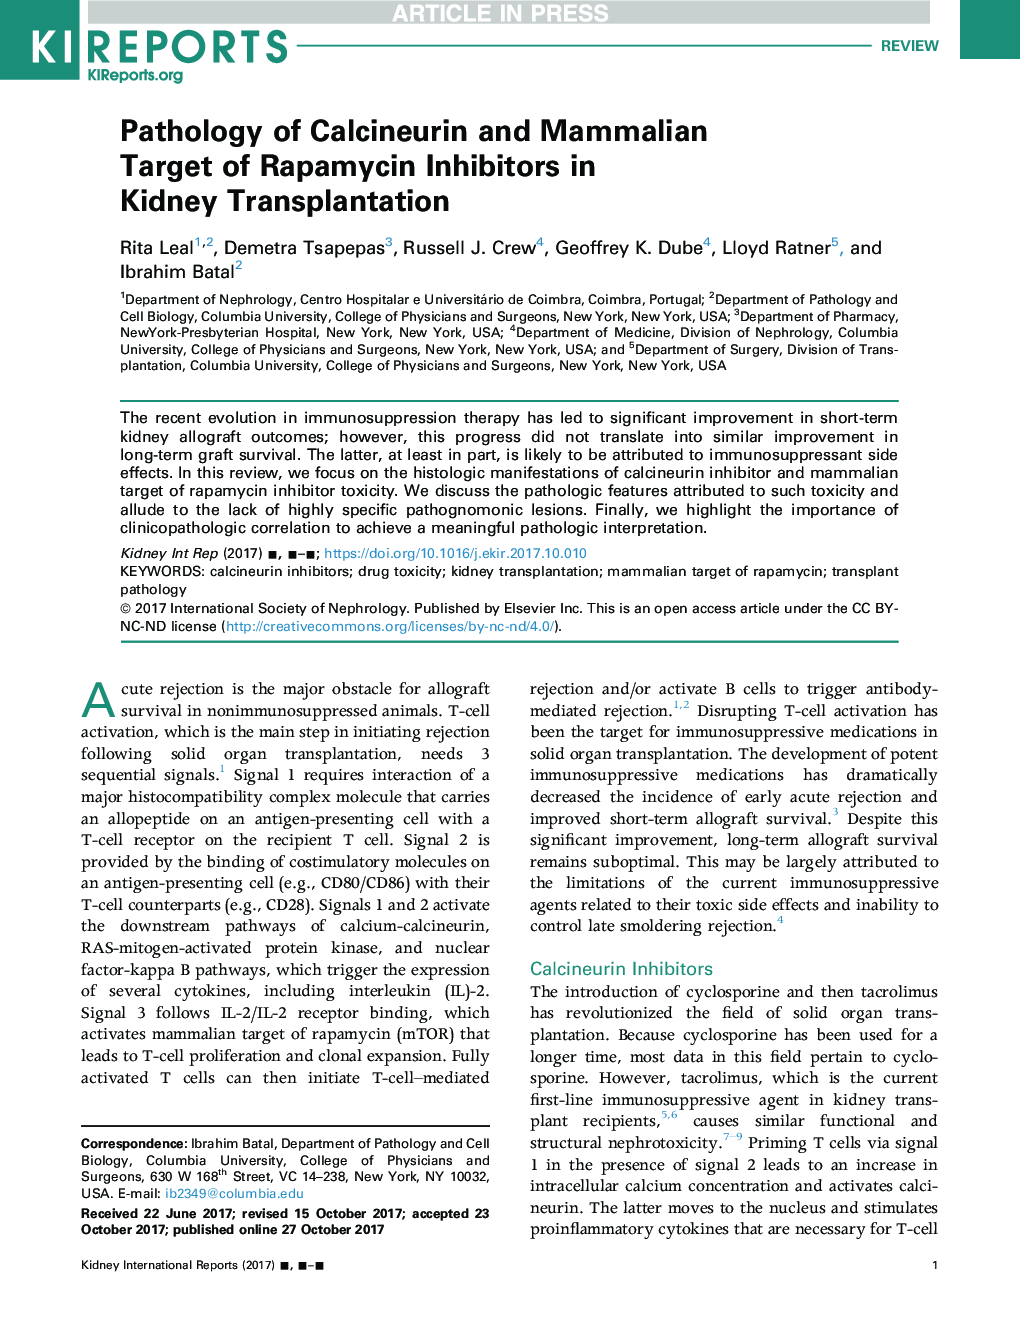 Pathology of Calcineurin and Mammalian Target of Rapamycin Inhibitors in KidneyÂ Transplantation